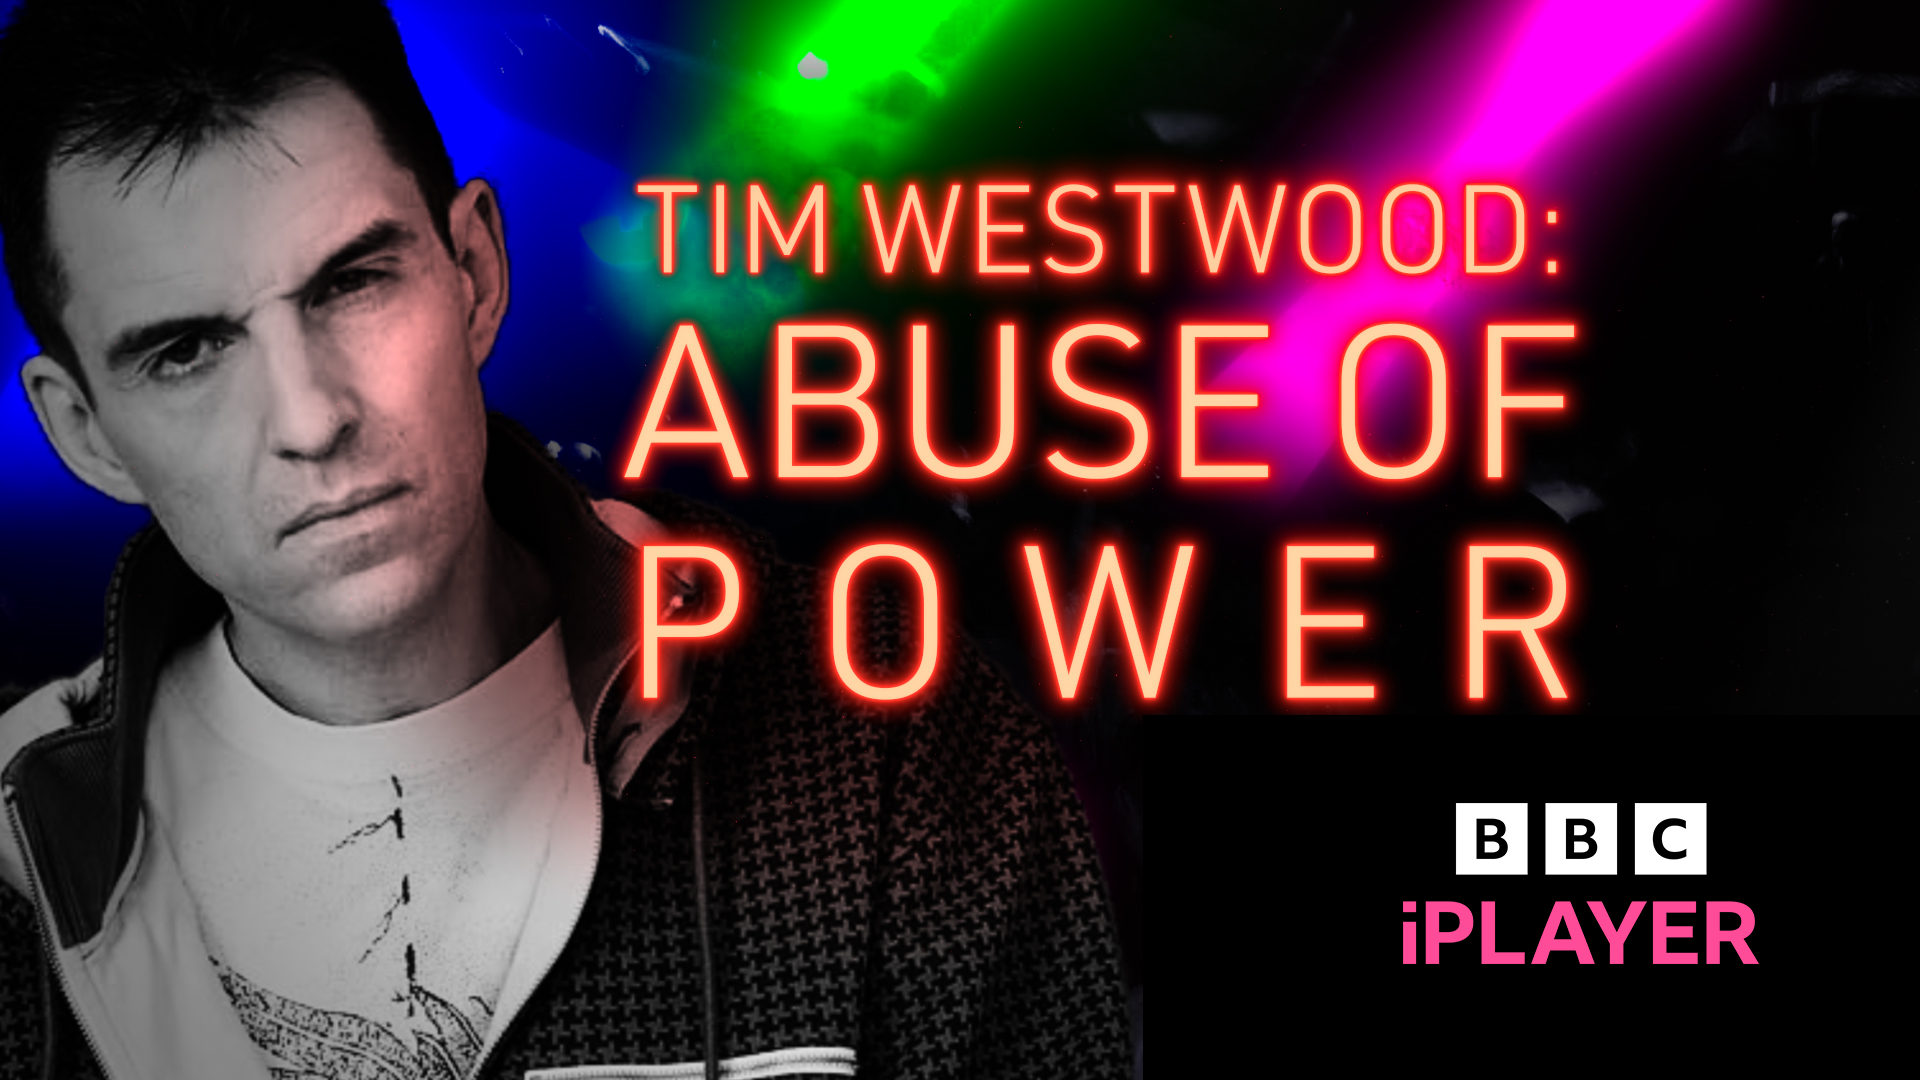 BBC iPlayer image: Tim Westwood: Abuse of Power